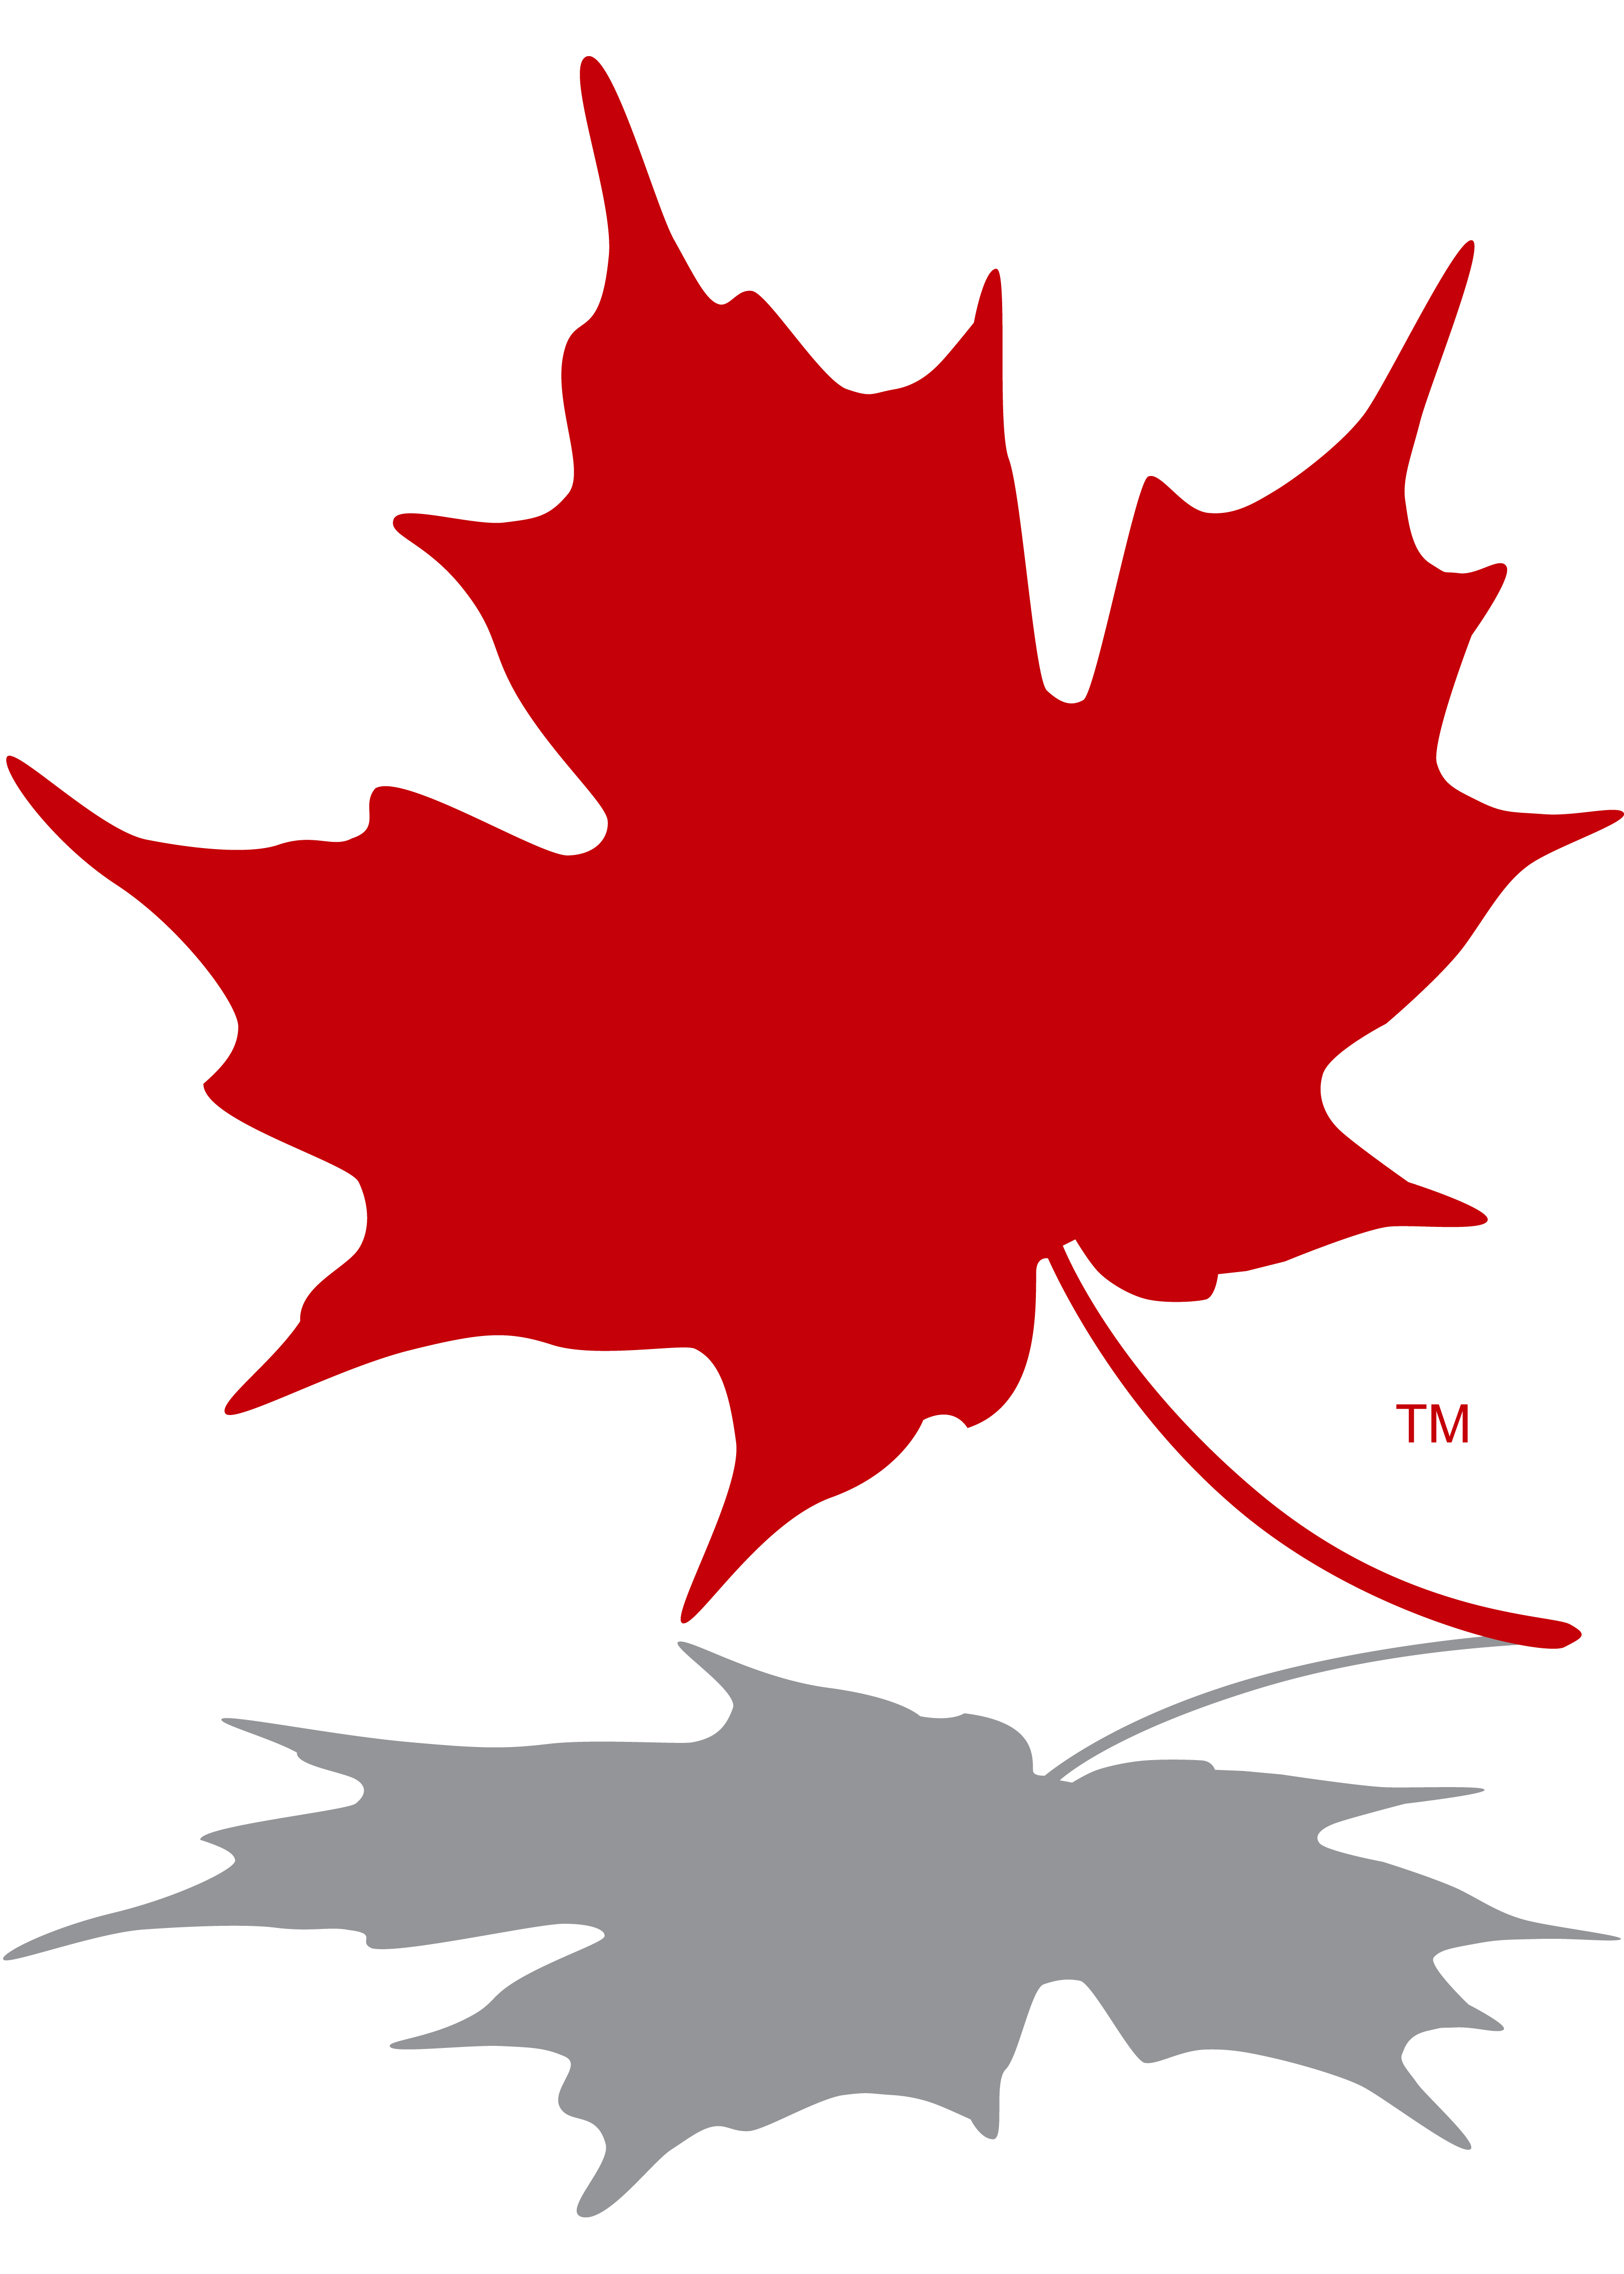 Maple Leaf Mold's logo